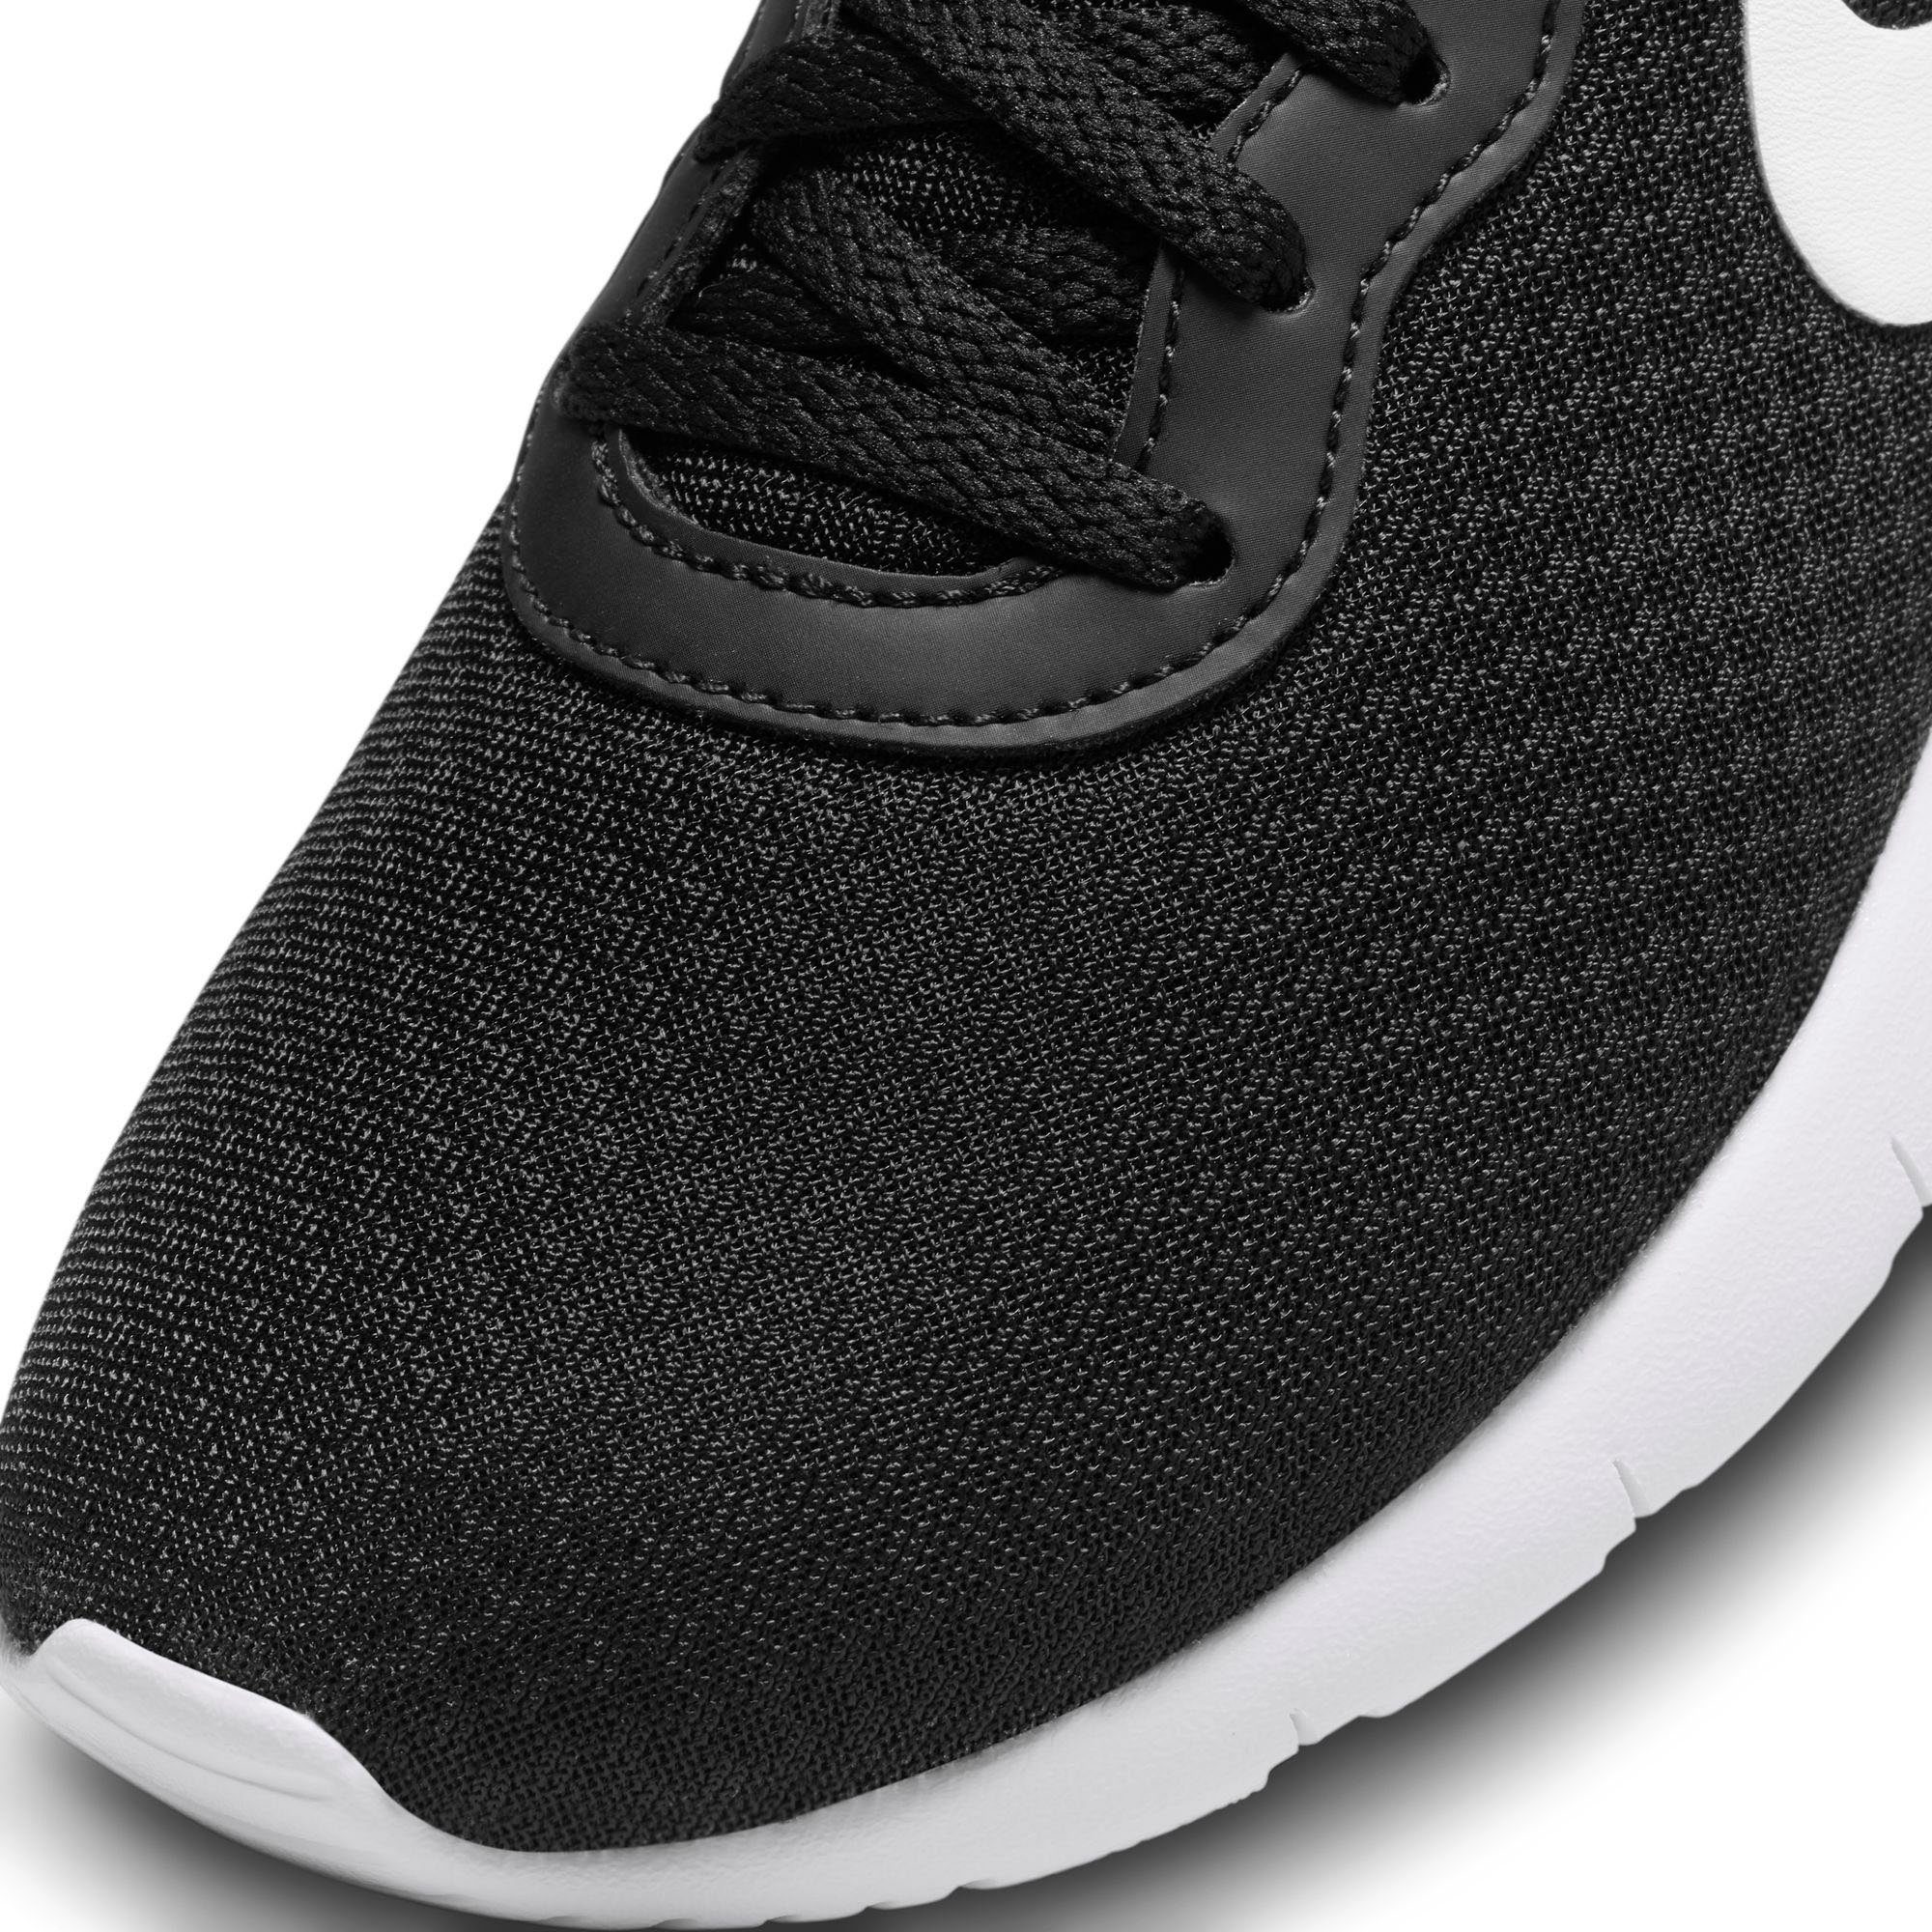 GO Sneaker black/white (GS) Sportswear Nike TANJUN